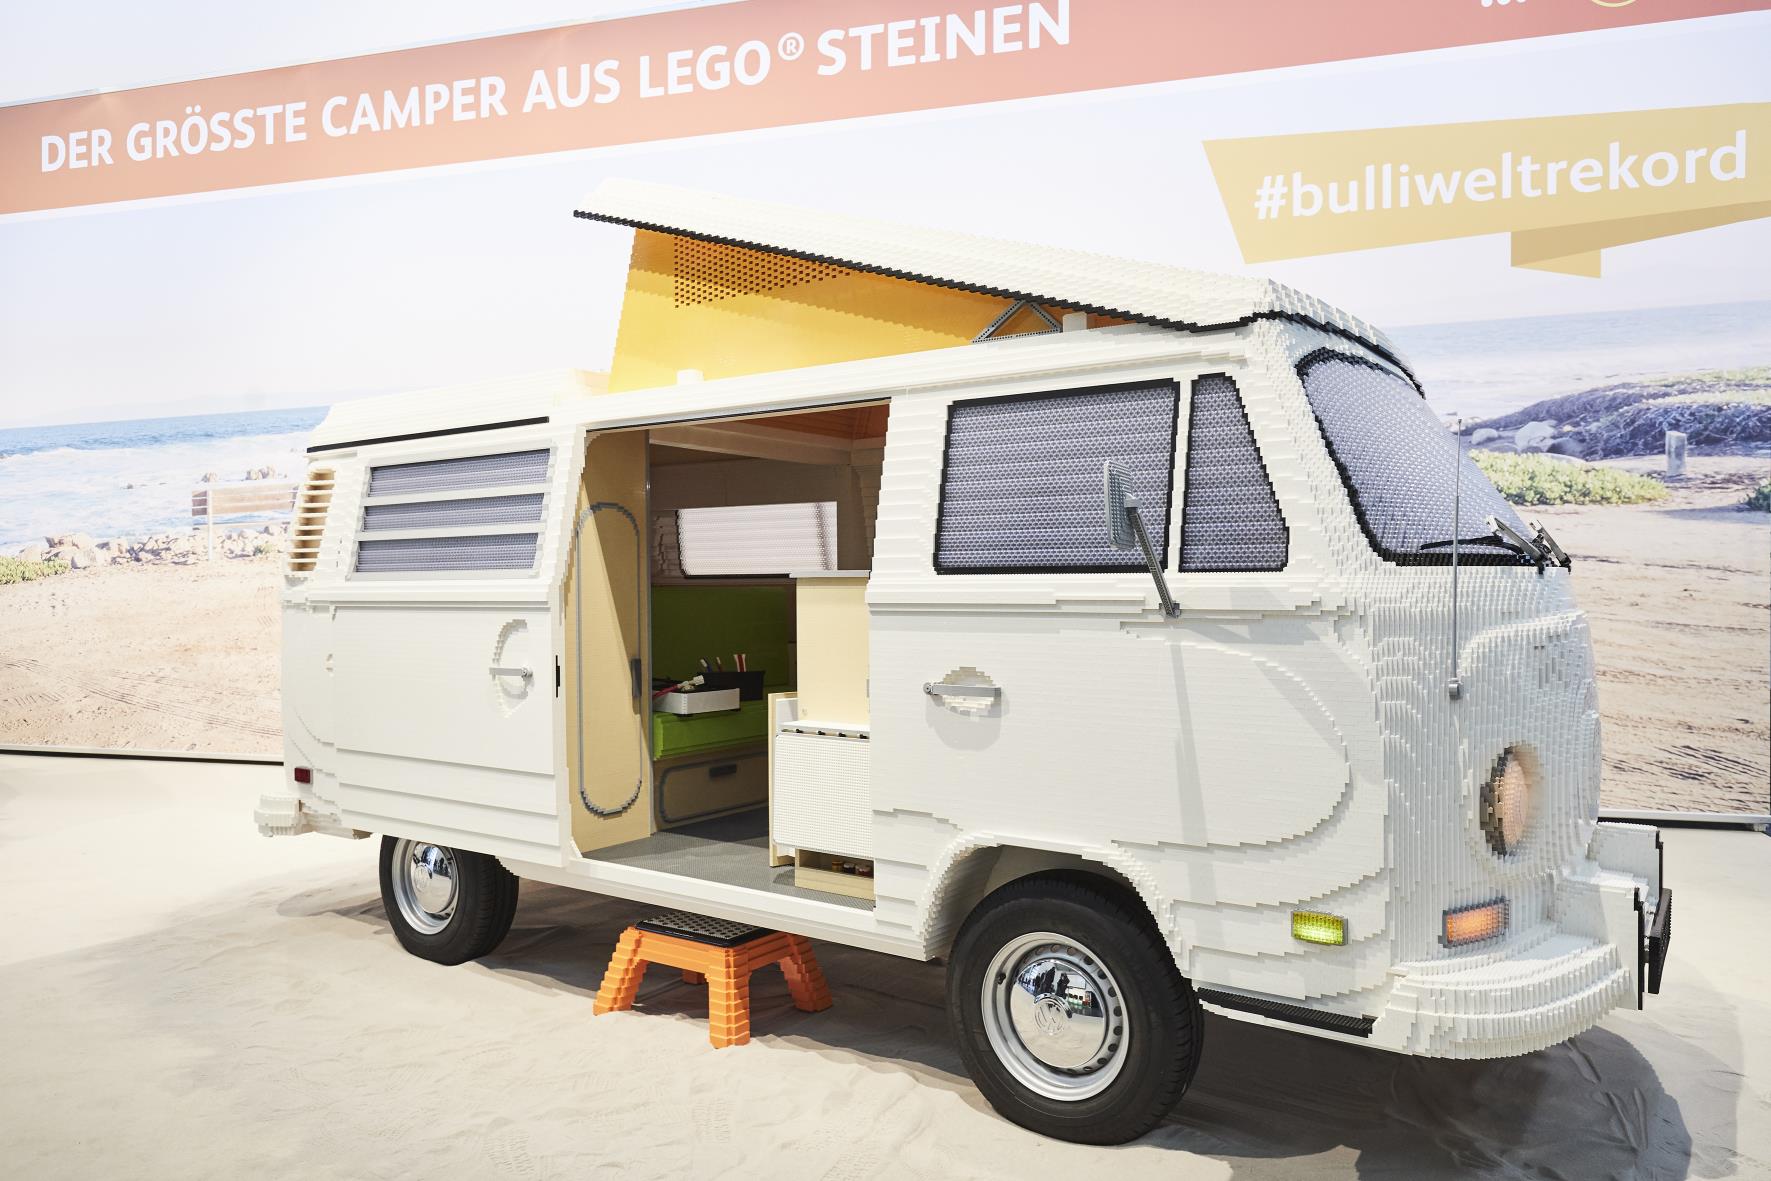 Volkswagen Transporter Lego